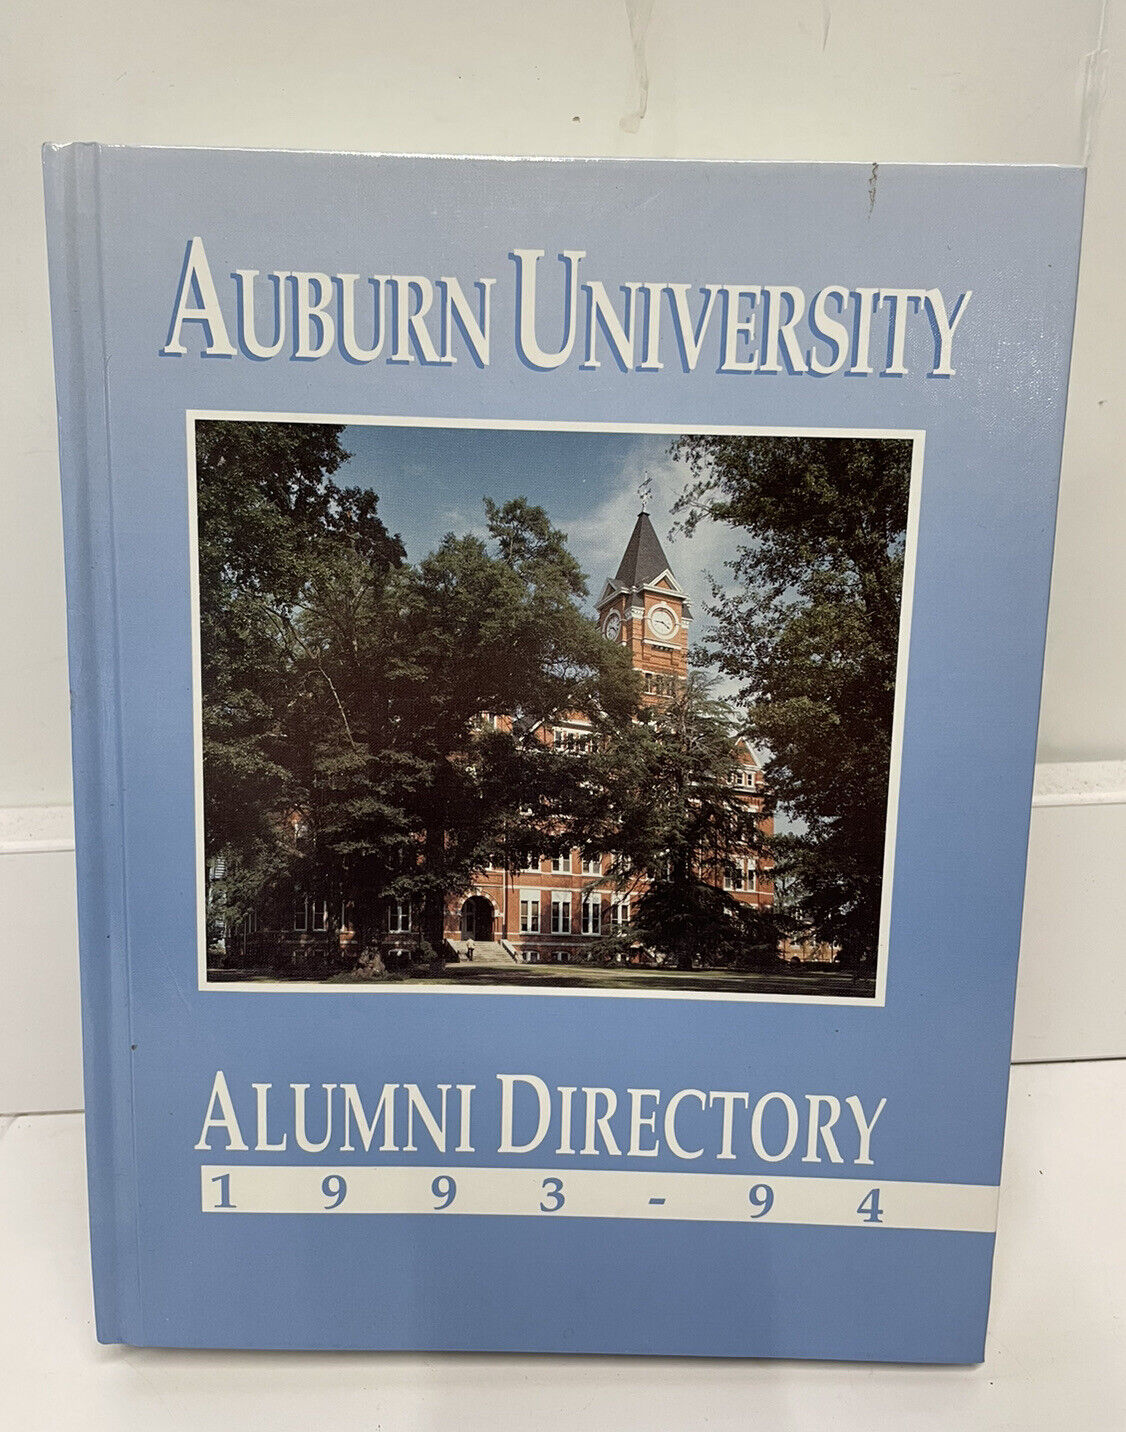 Auburn University Alumni Directory 1993-1994, Bernard C. Harris Publishing